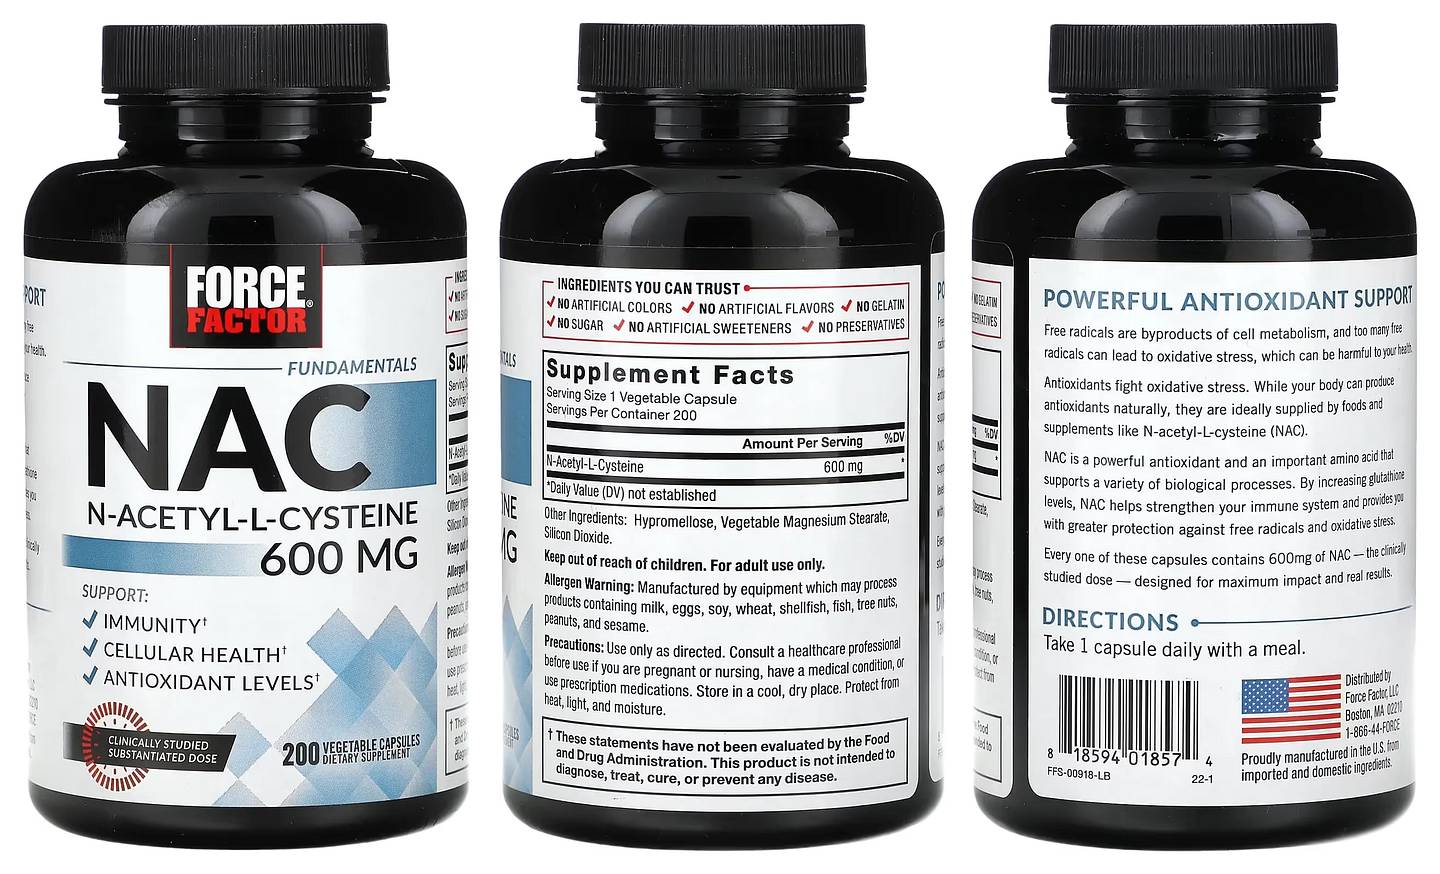 Force Factor, Fundamentals, NAC, N-Acetyl-L-Cysteine, 600 mg packaging